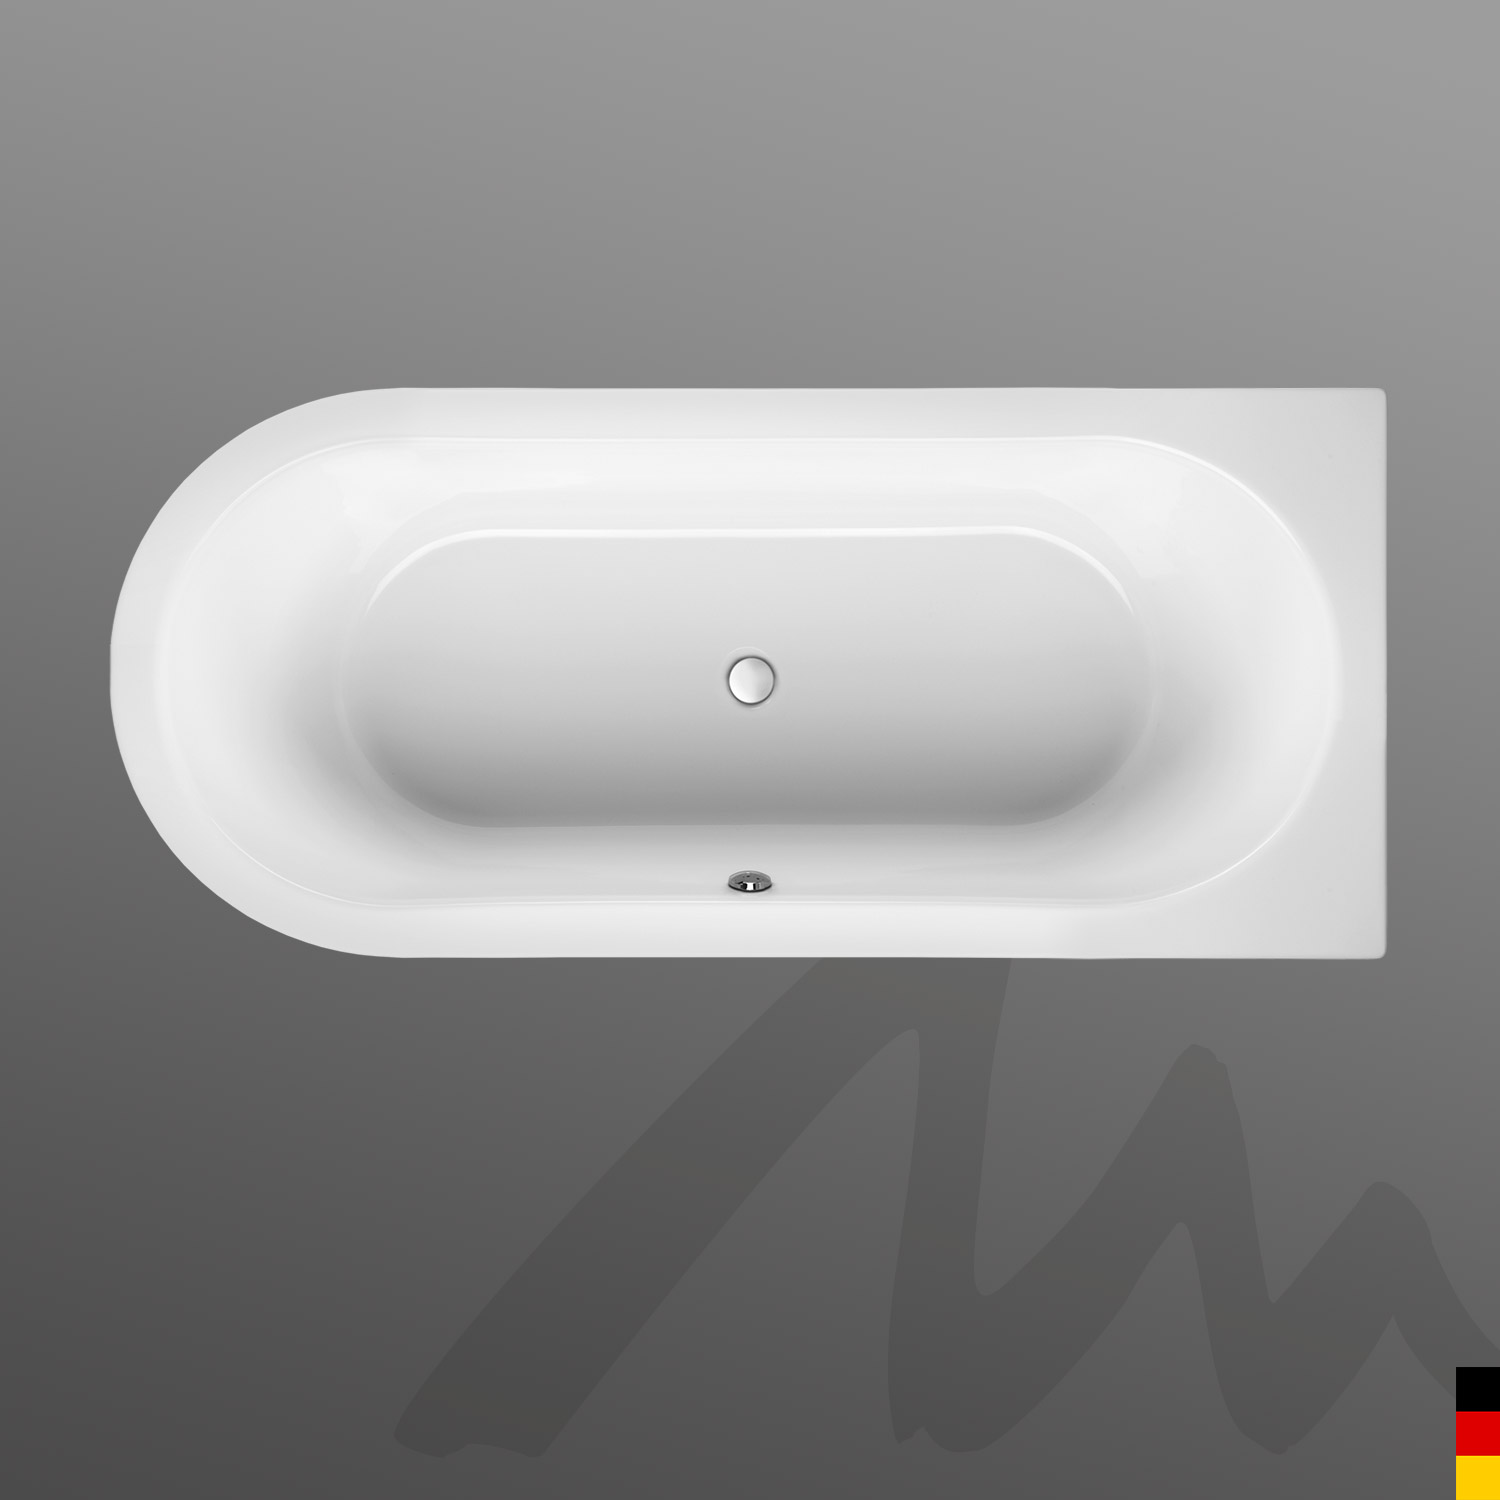 Mauersberger Badewanne Oval Primo 3 - 180/80 duo  180x80x45  Farbe:weiß